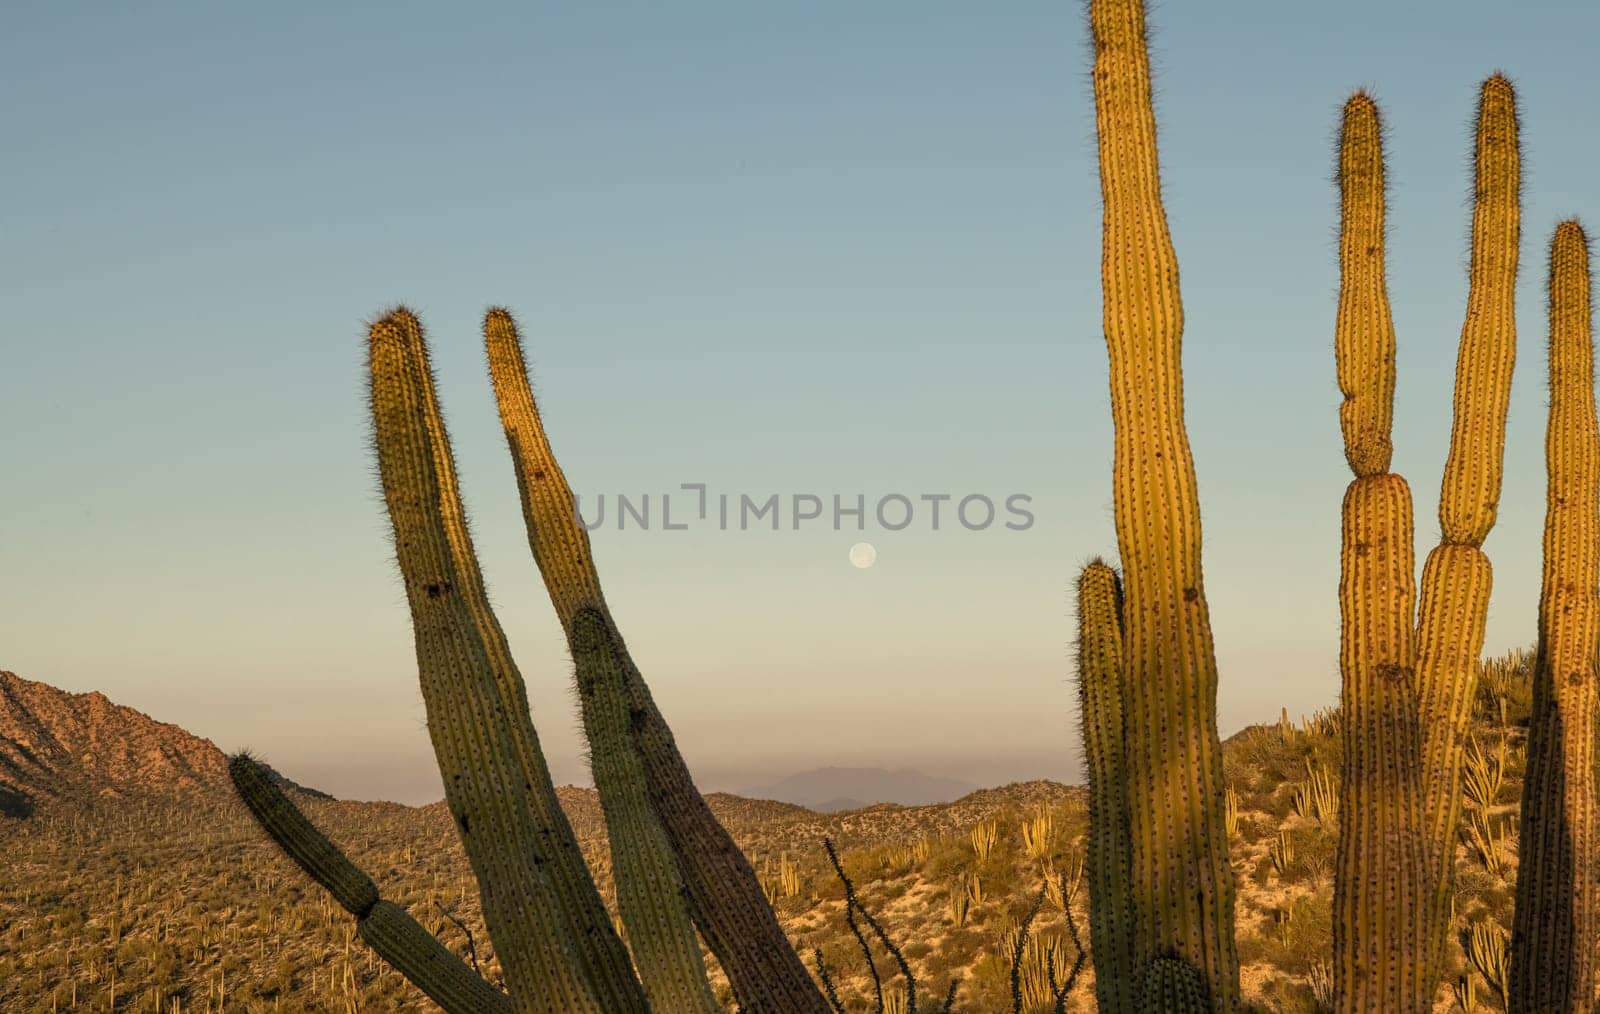 Desert Organ Pipe Cacti in sunrise silhouette by lisaldw